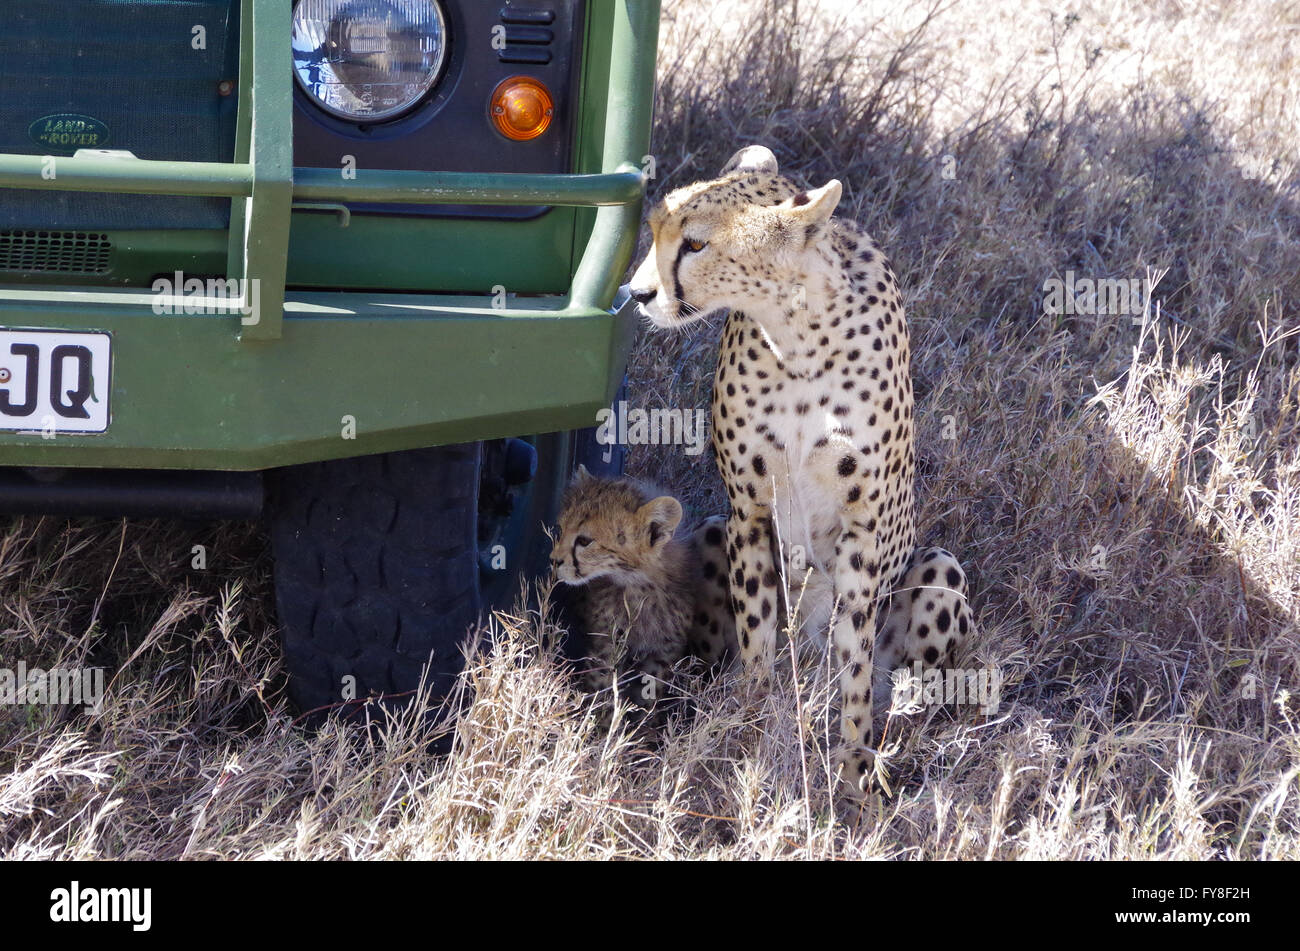 A cheetah with a cub sitting in the shade of safari vehicle in Serengeti, Tanzania Stock Photo